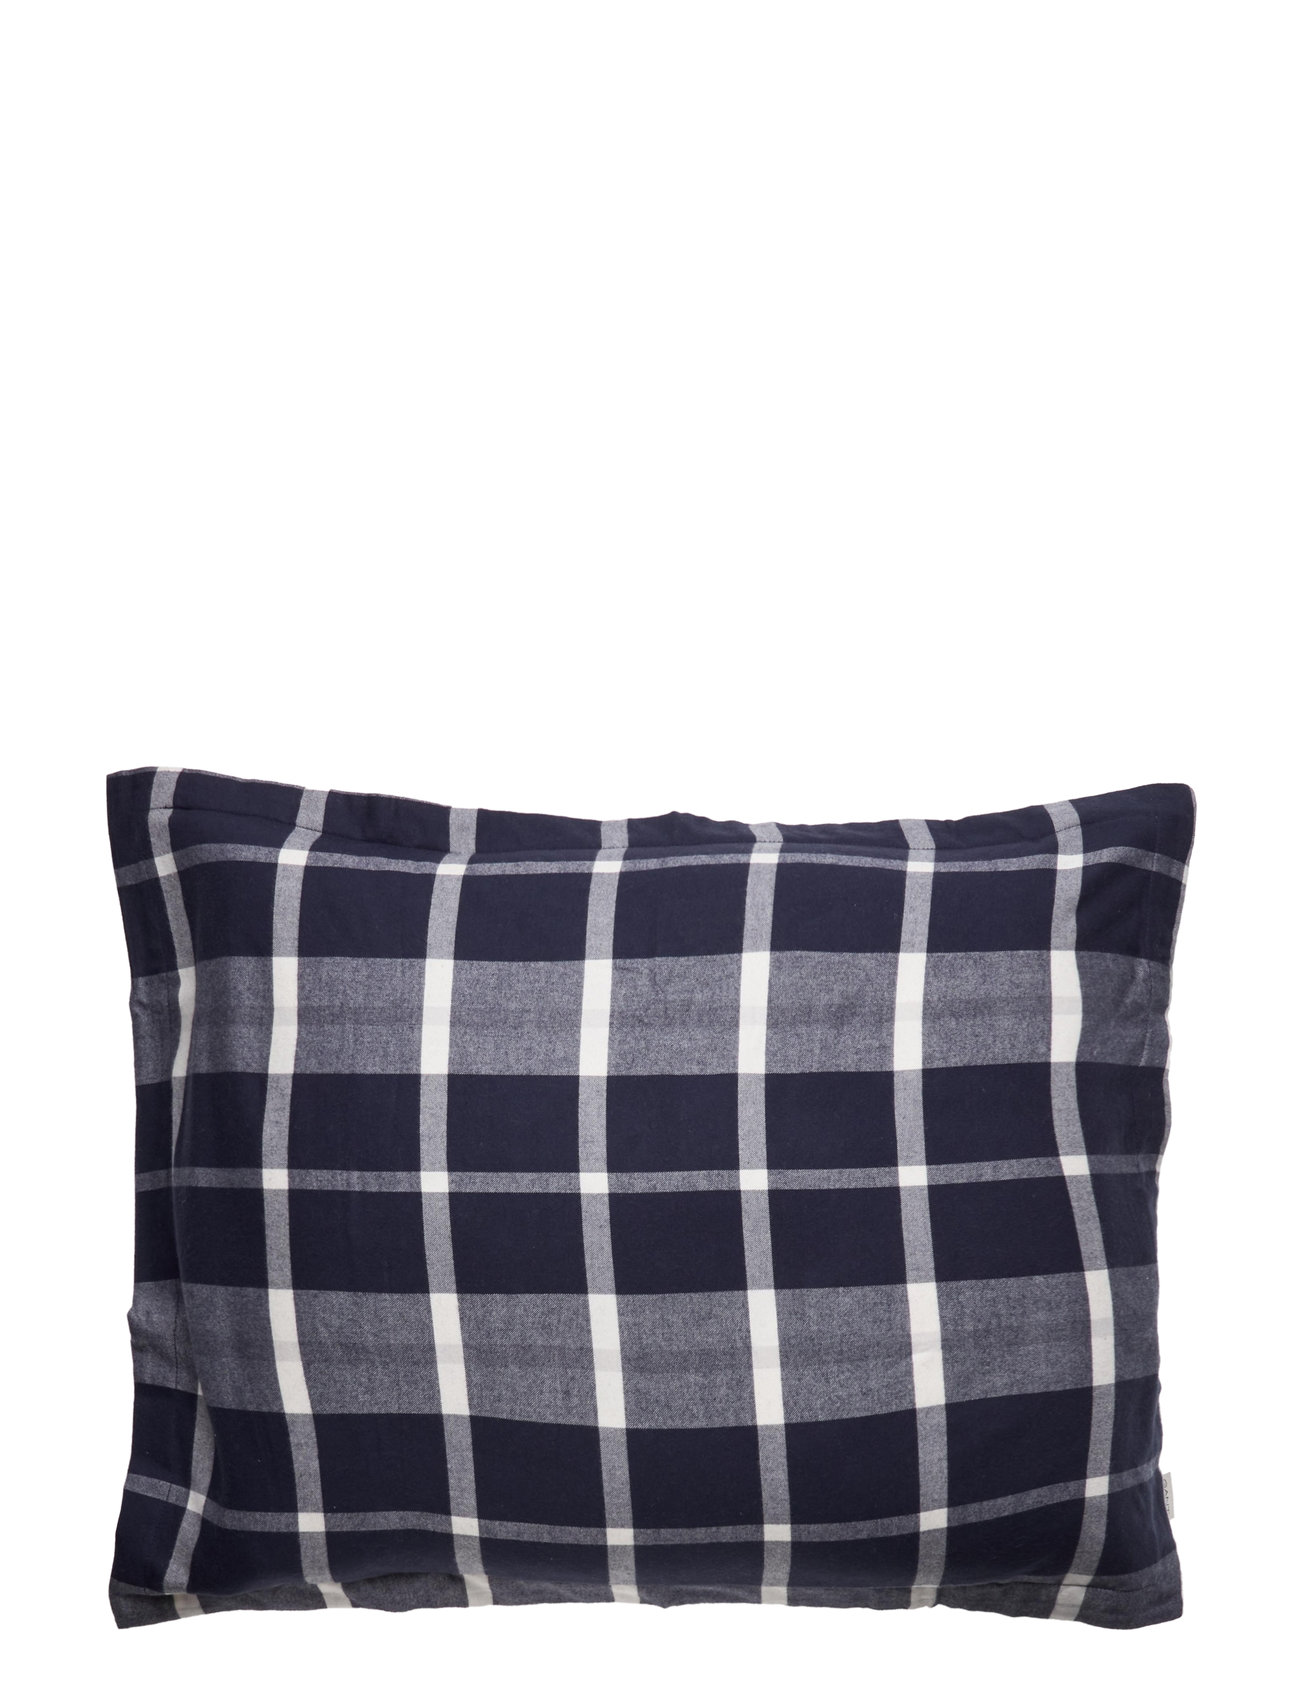 Flannel Check Pillowcase Home Textiles Bedtextiles Pillow Cases Navy GANT